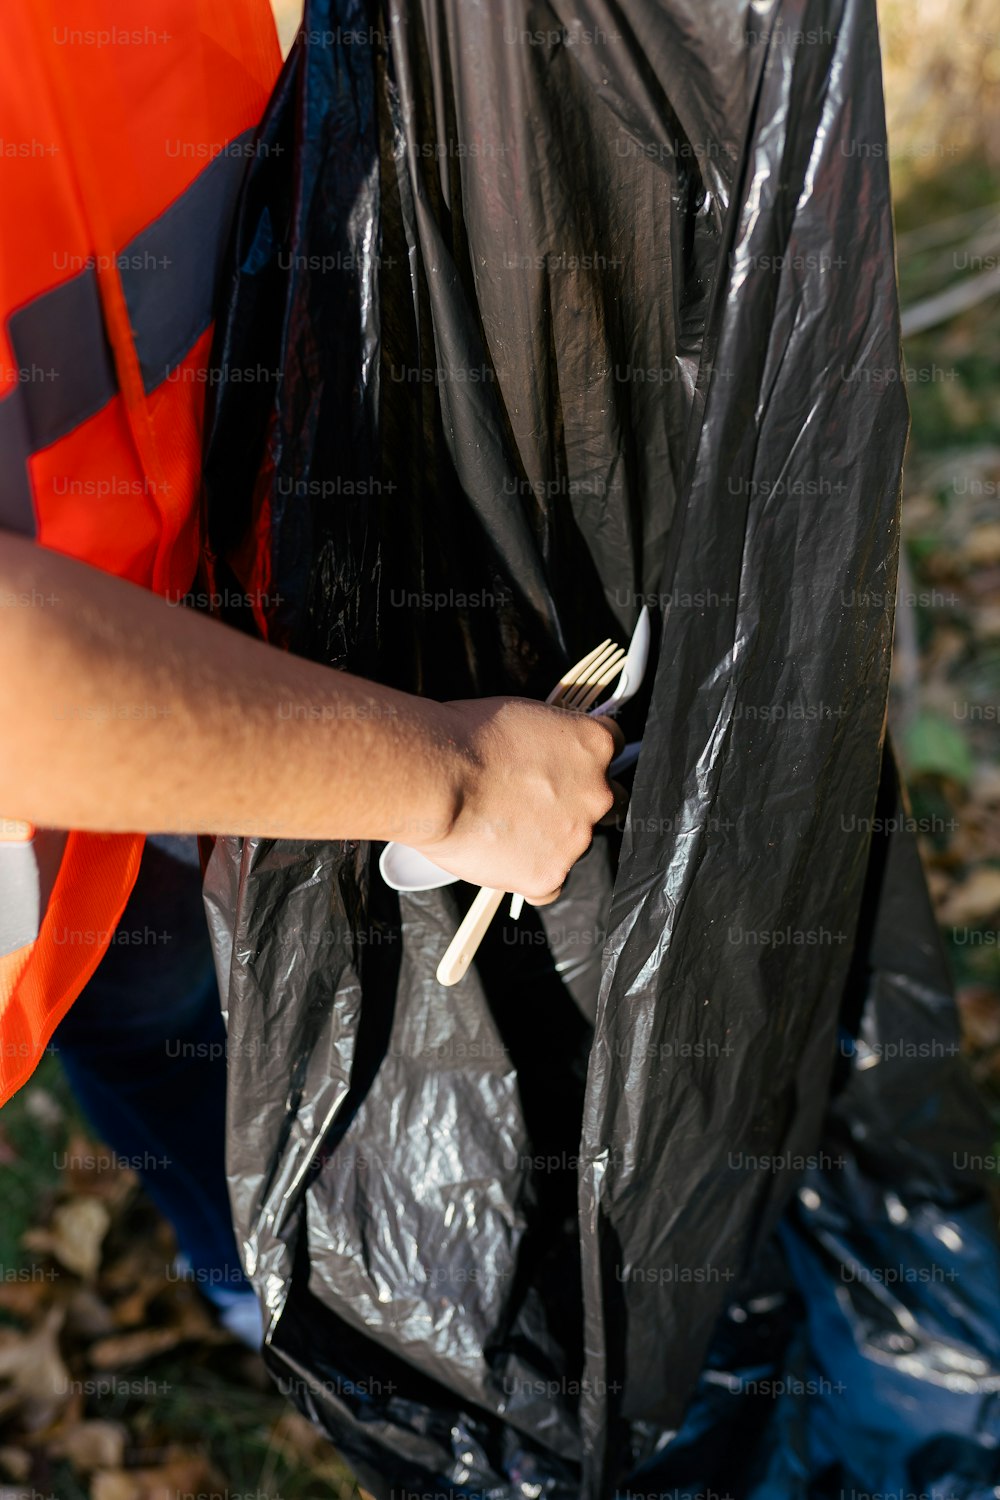 a person in an orange vest holding a black plastic bag